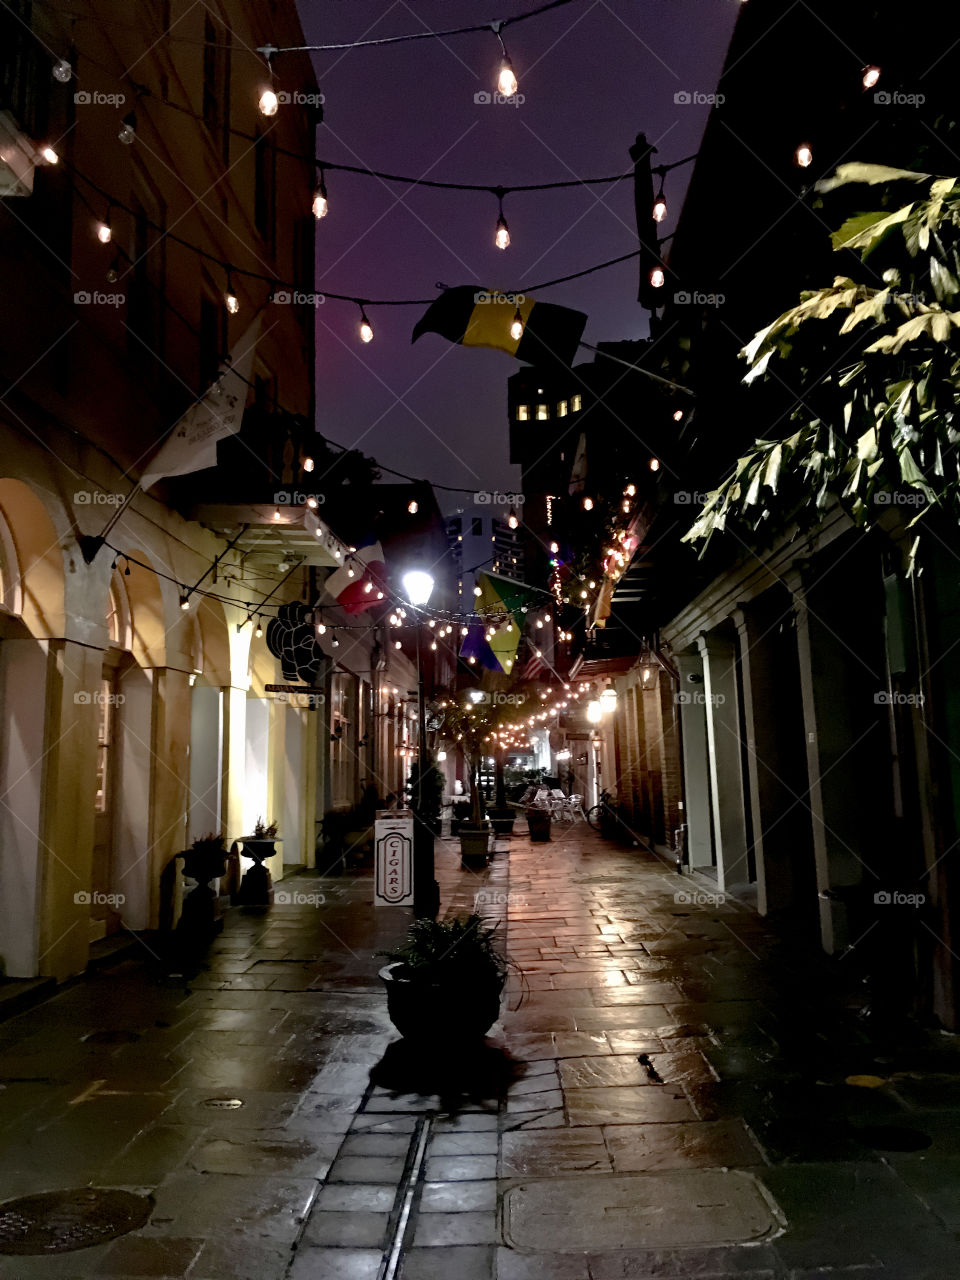 Wet New Orleans night